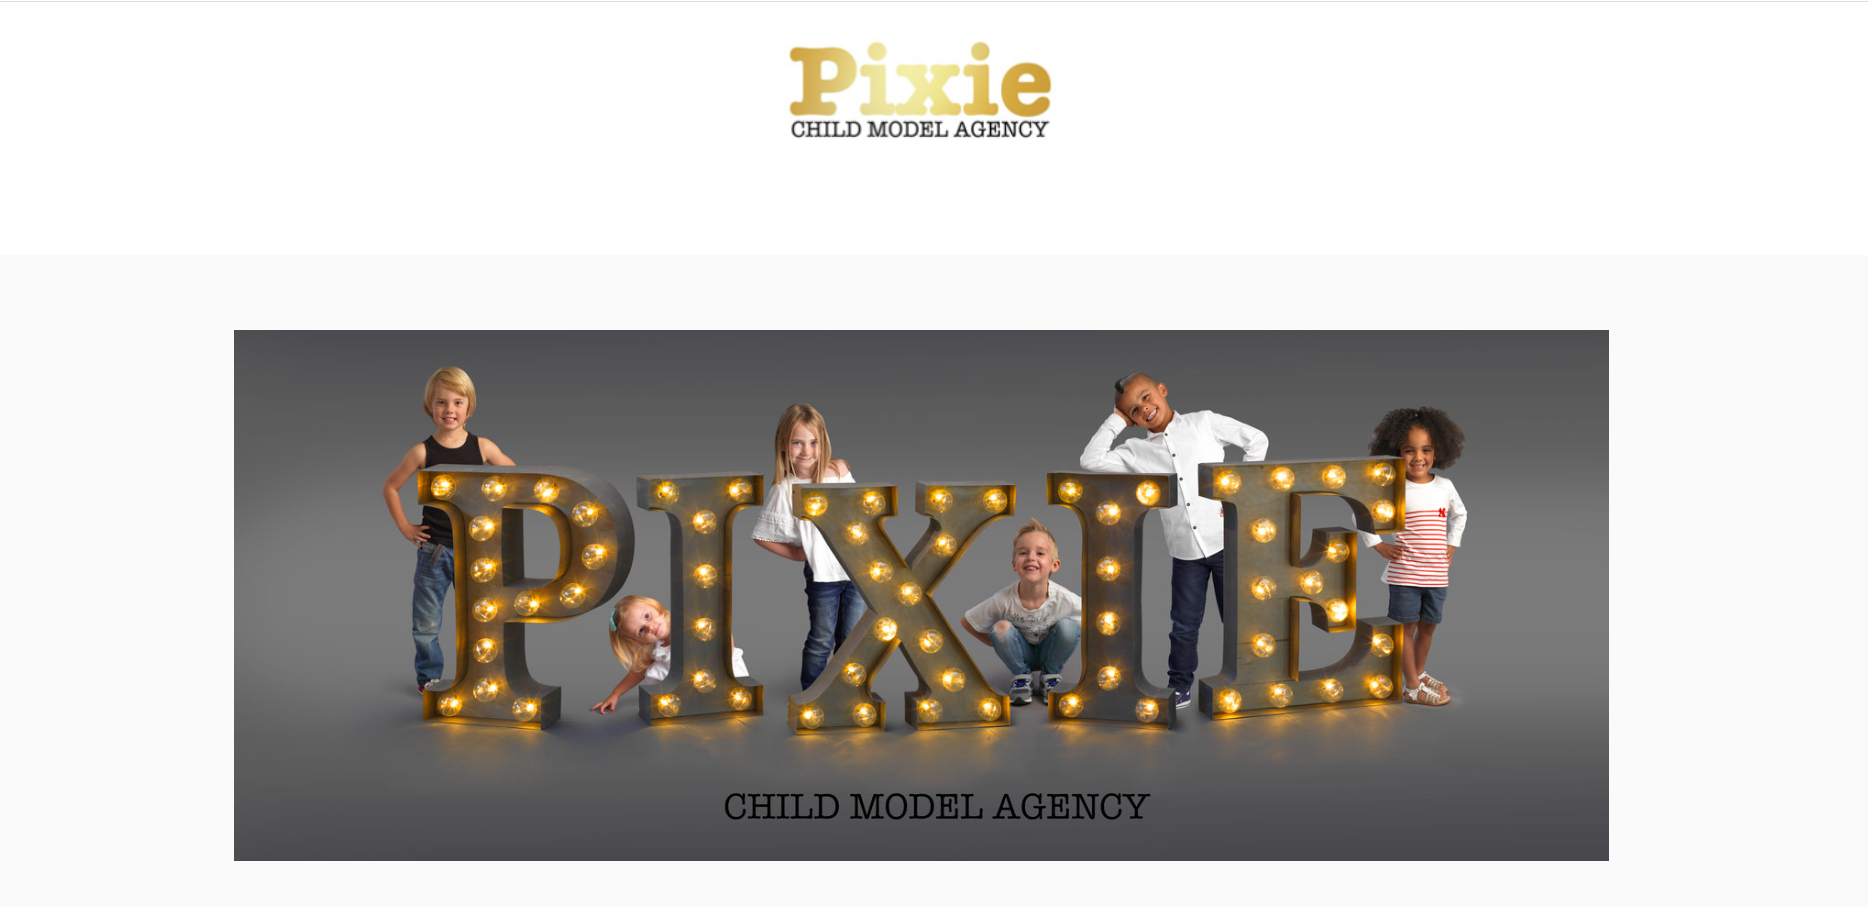 Pixie Child Model Agency